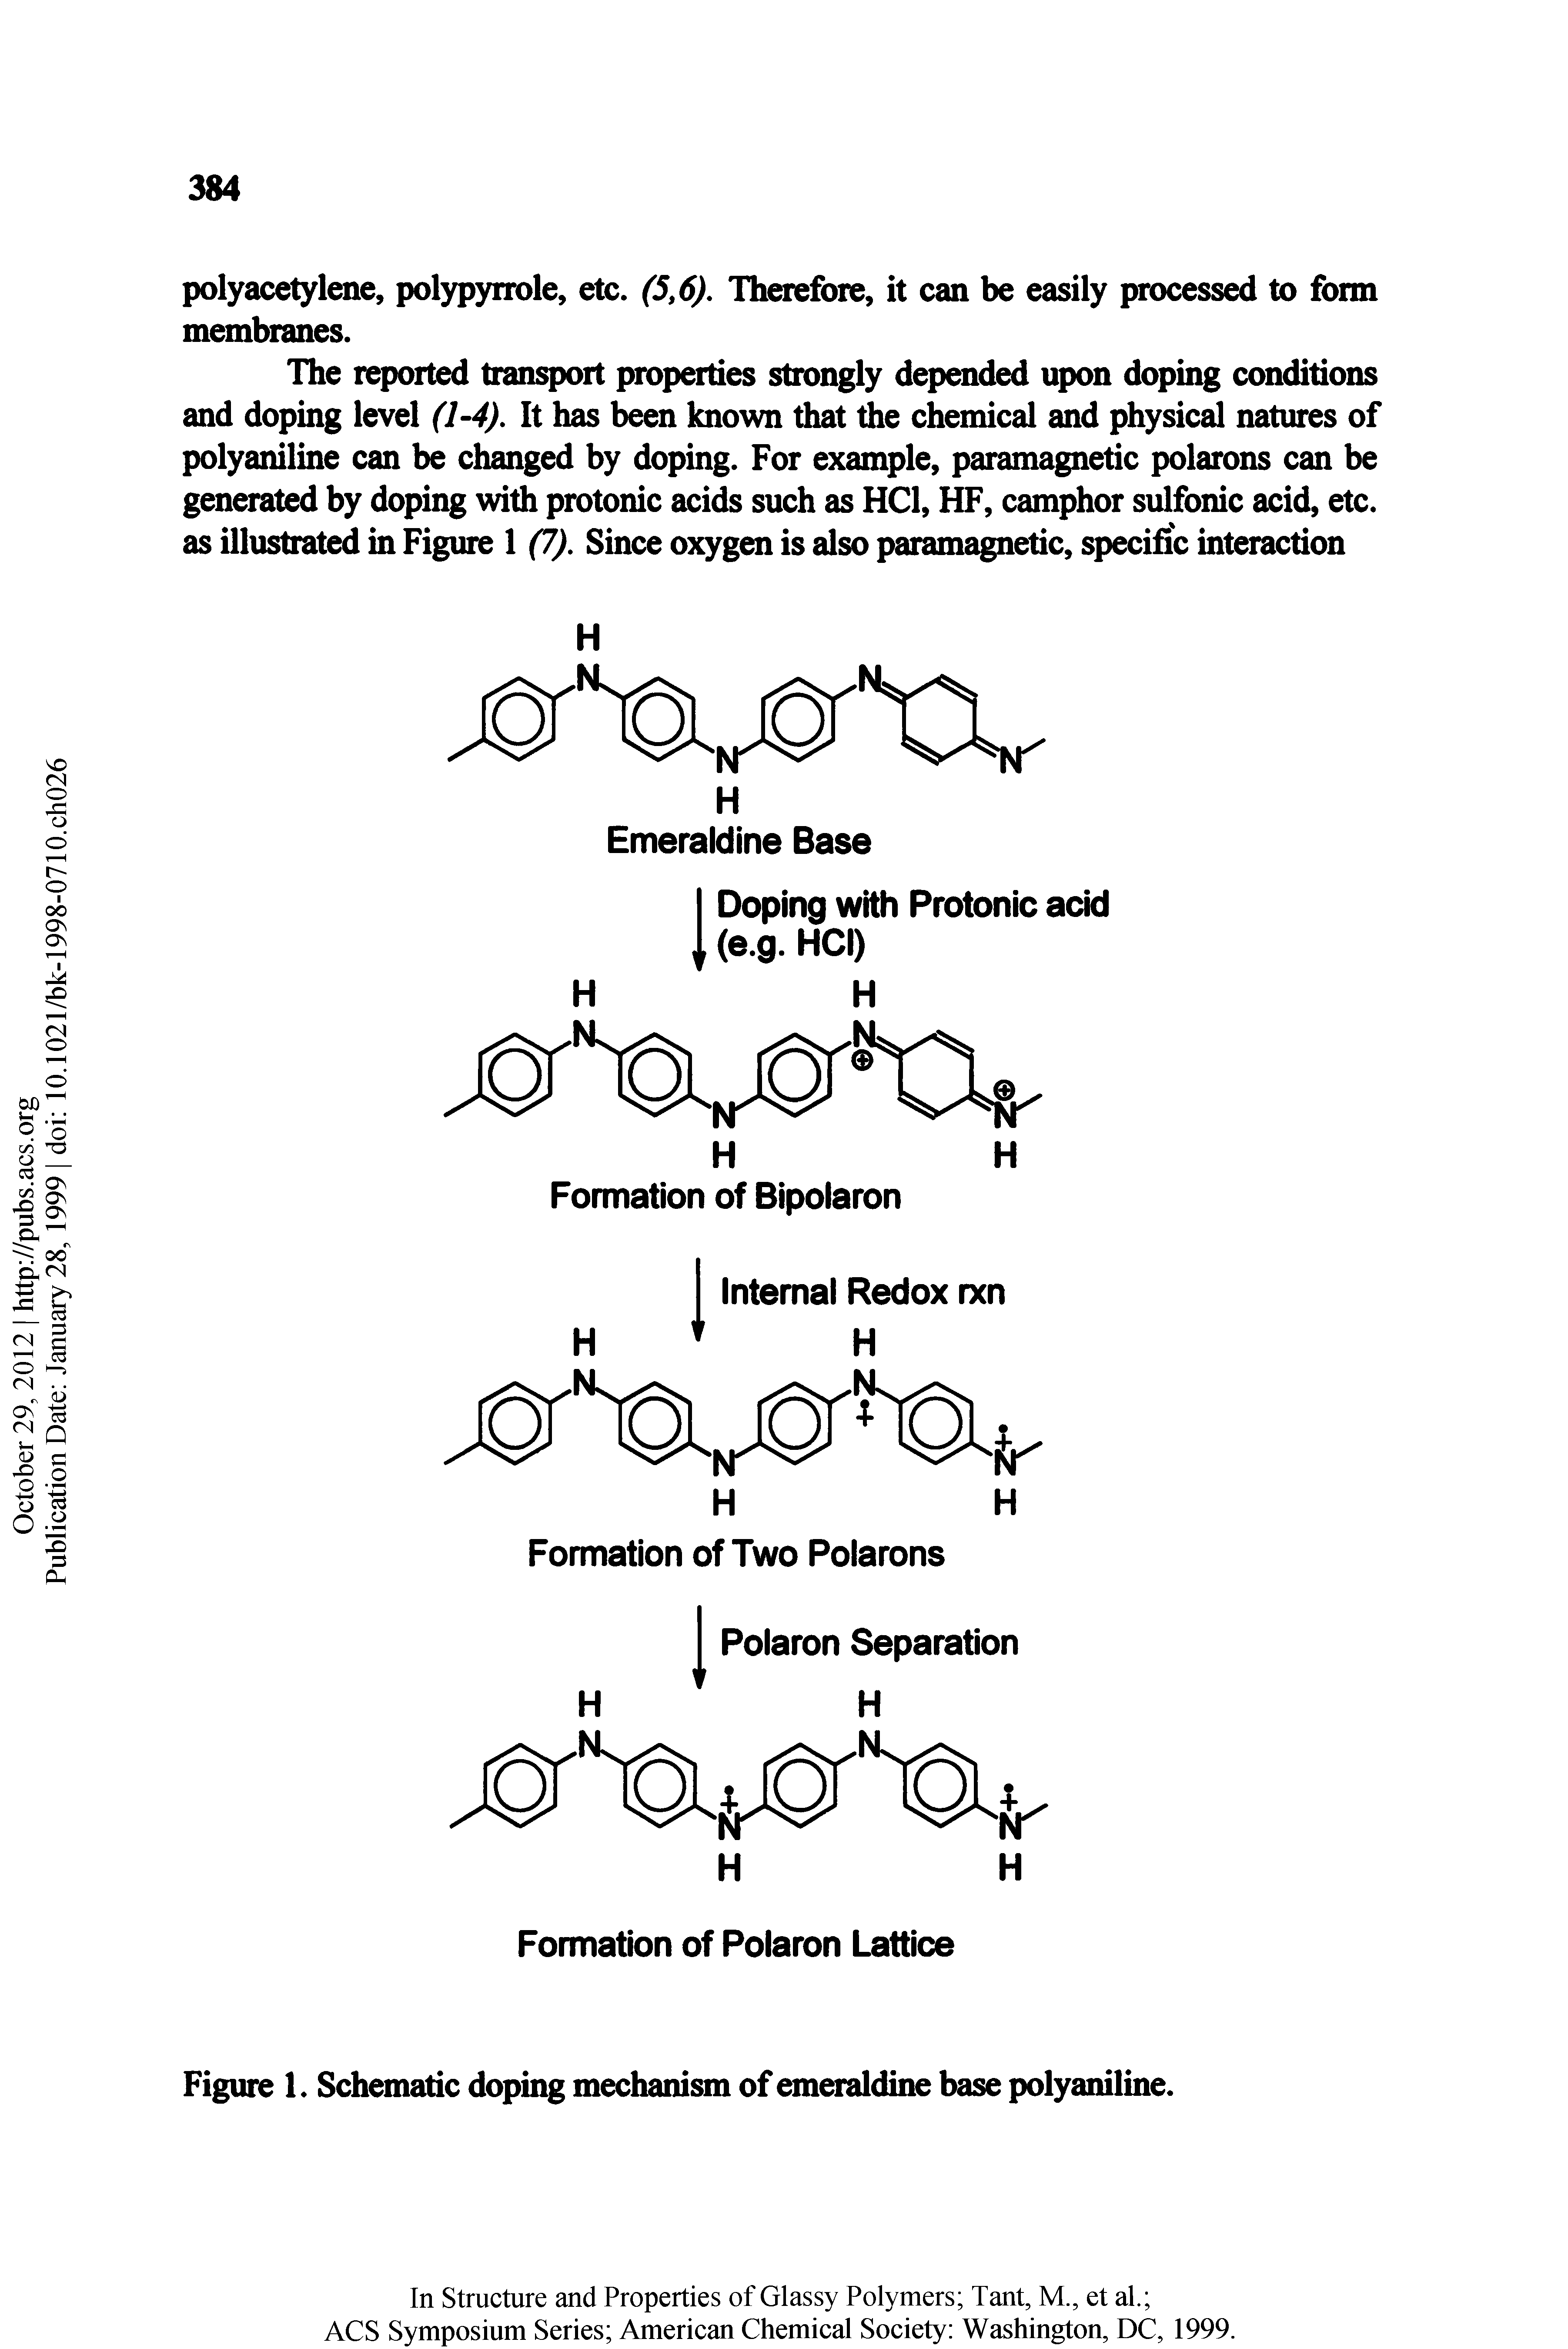 Figure 1. Schematic doping mechanism of emeraldine base polyaniline.